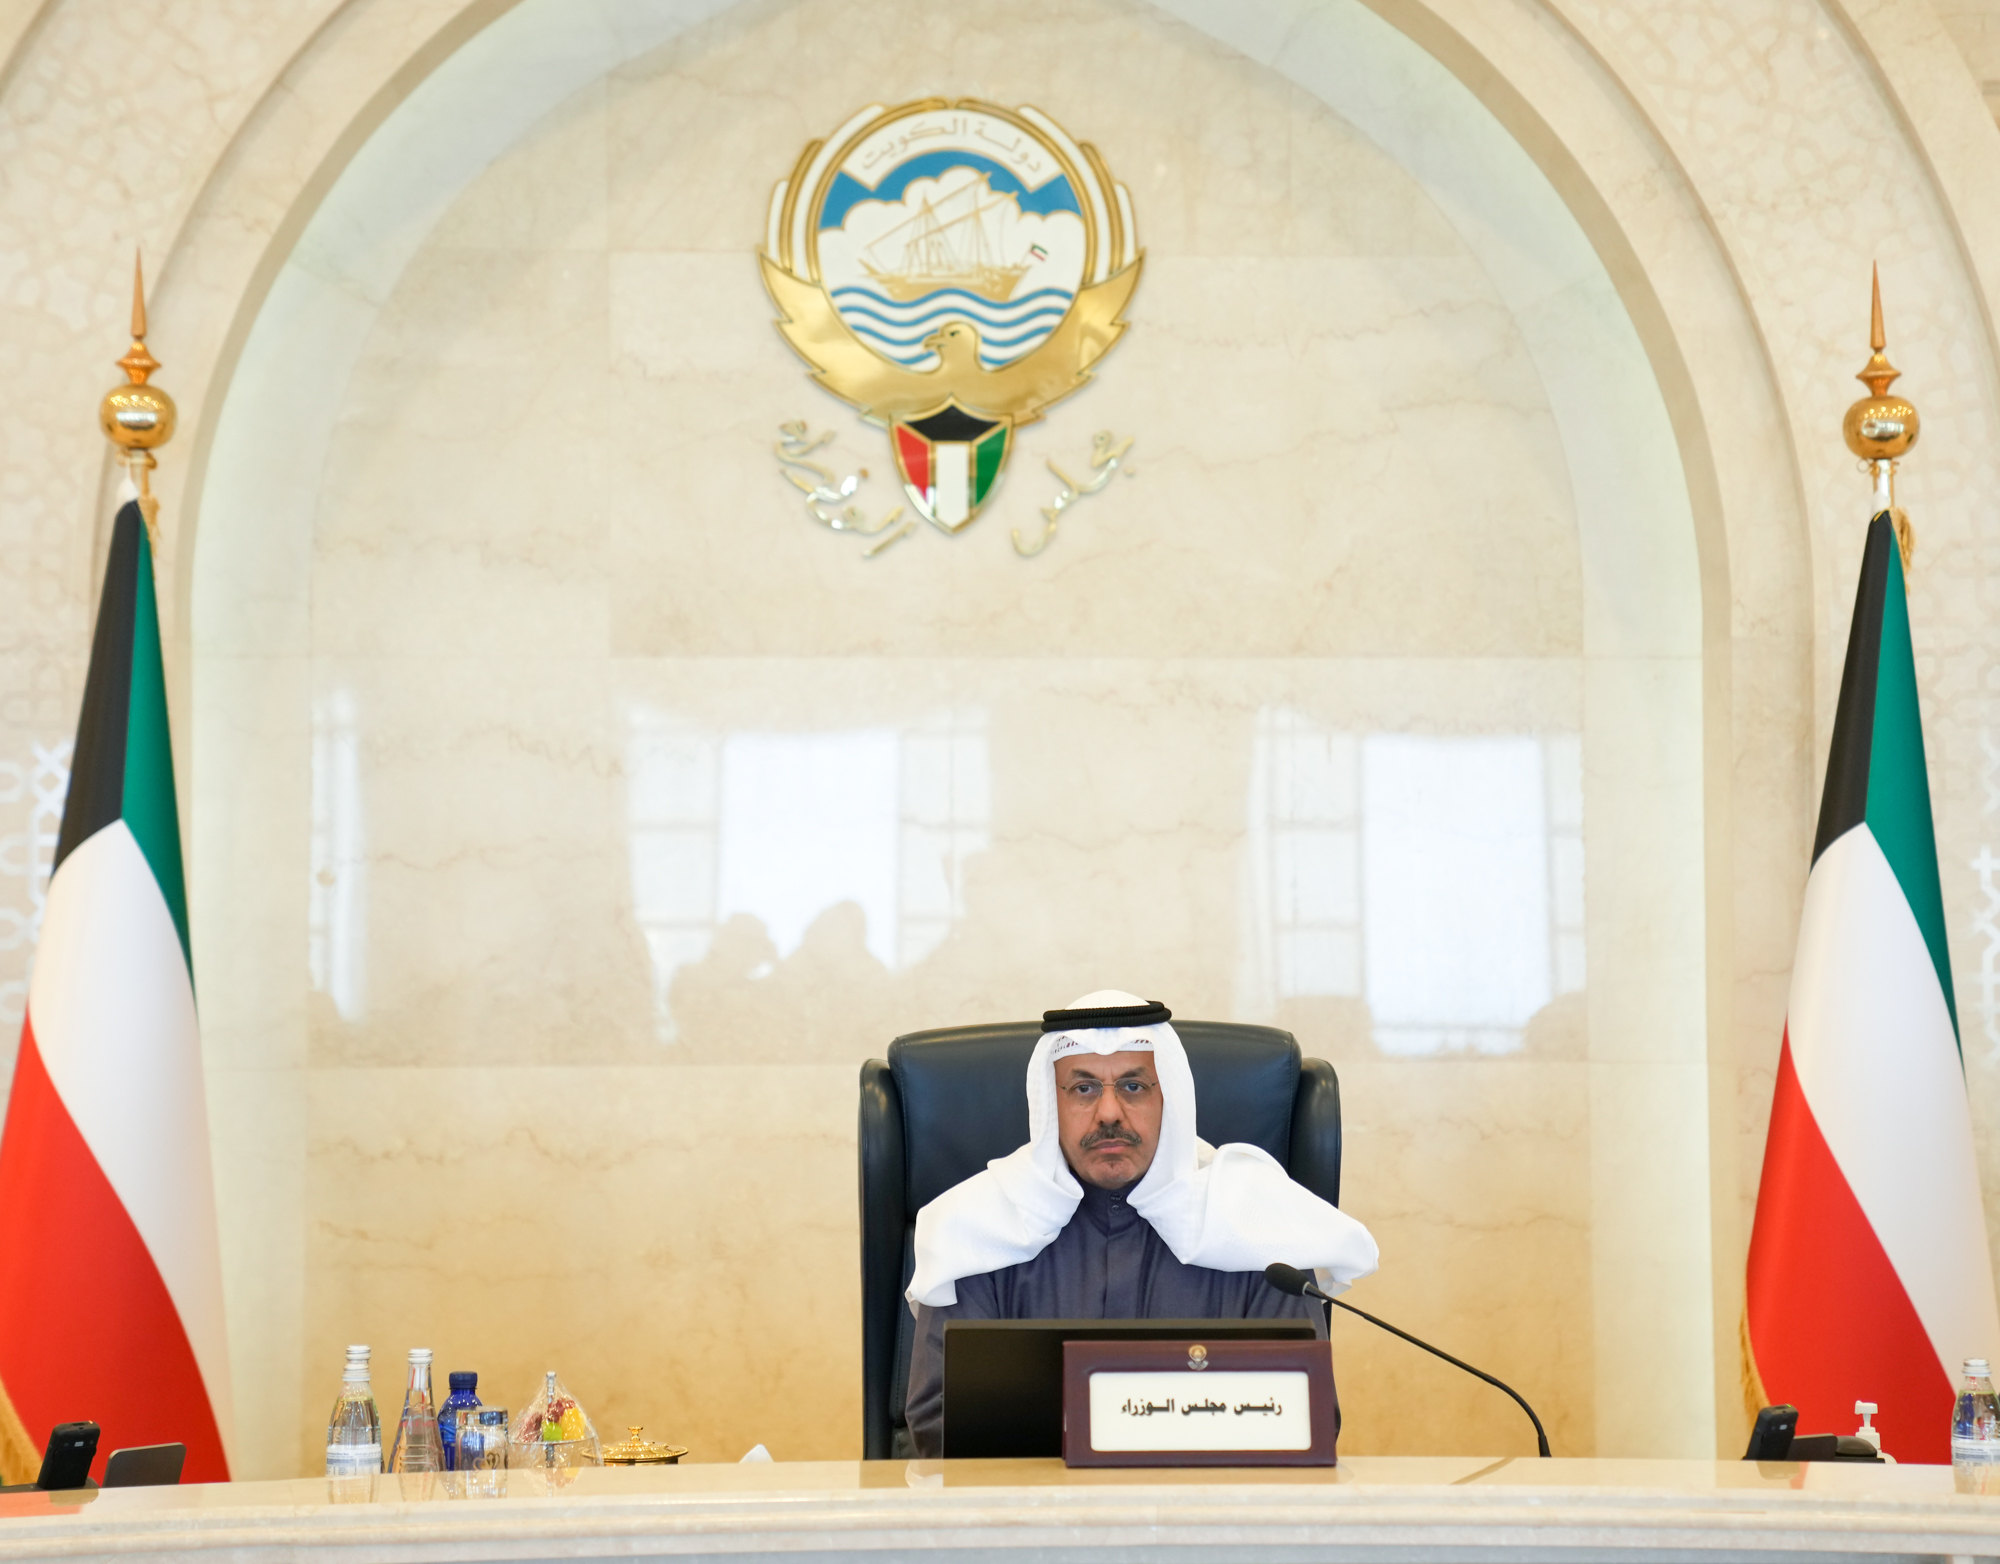 His Highness the Prime Minister Sheikh Ahmad Nawaf Al-Ahmad Al-Jaber Al-Sabah